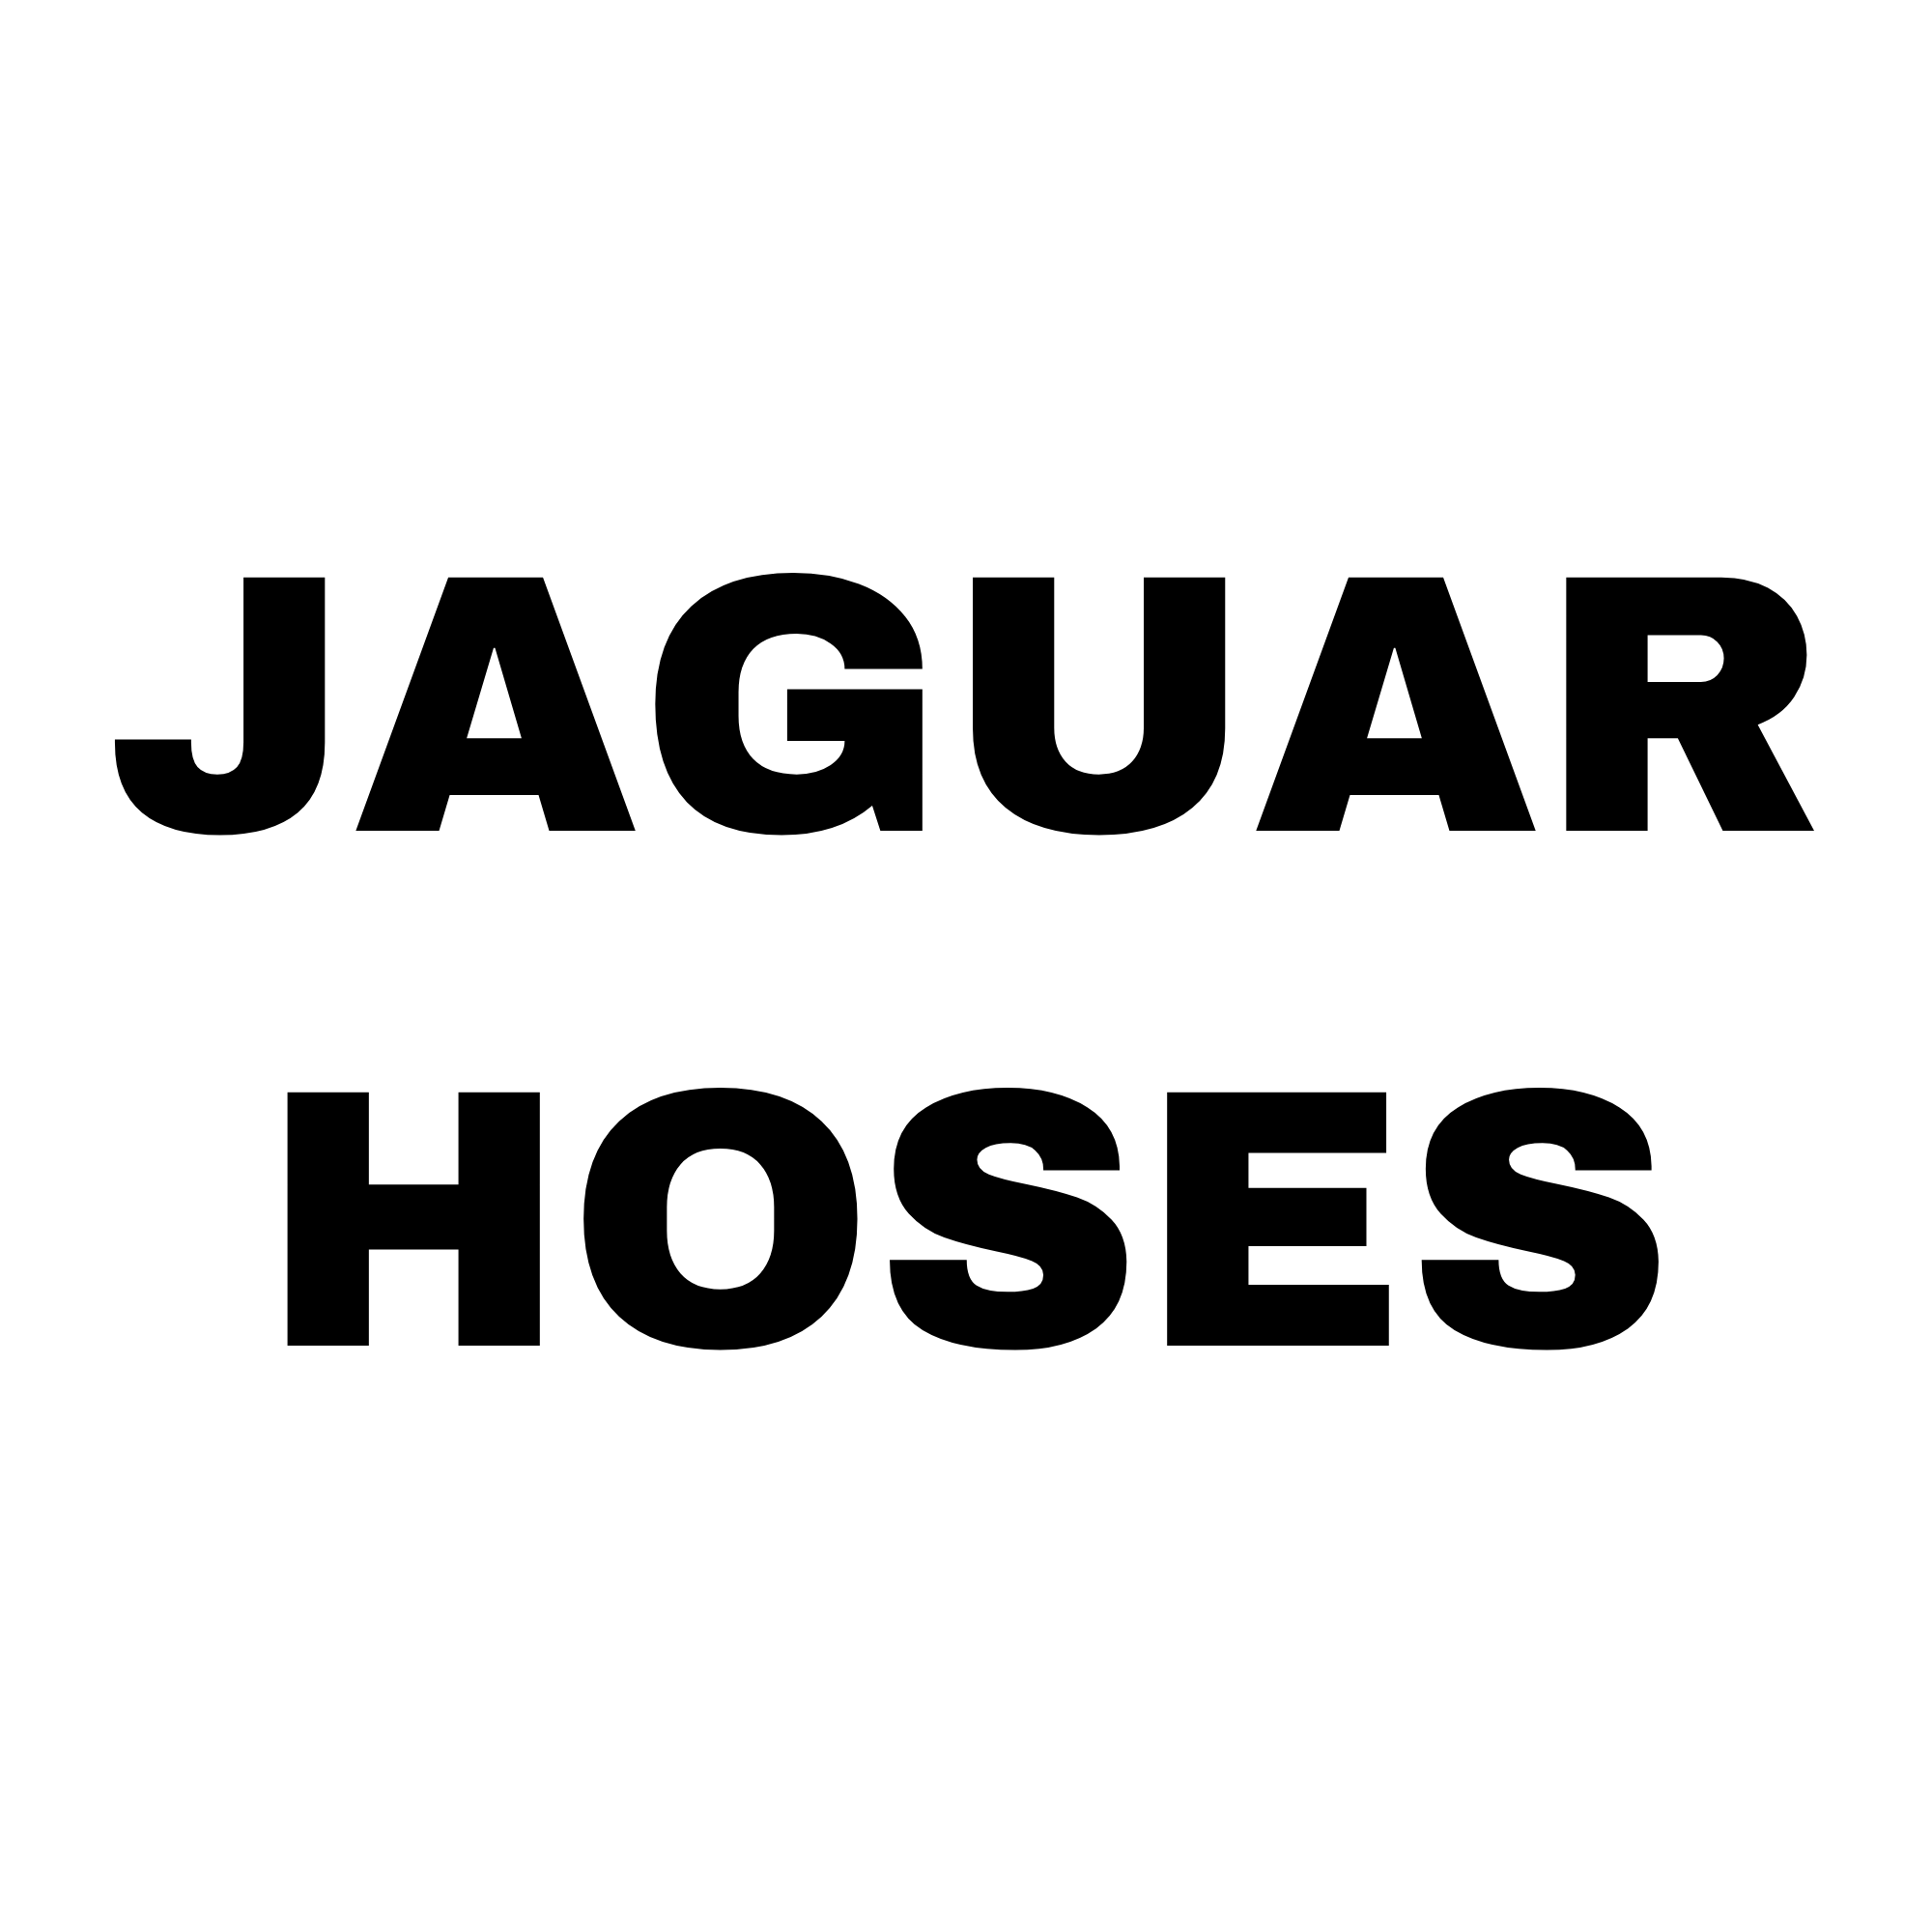 Jaguar Hoses